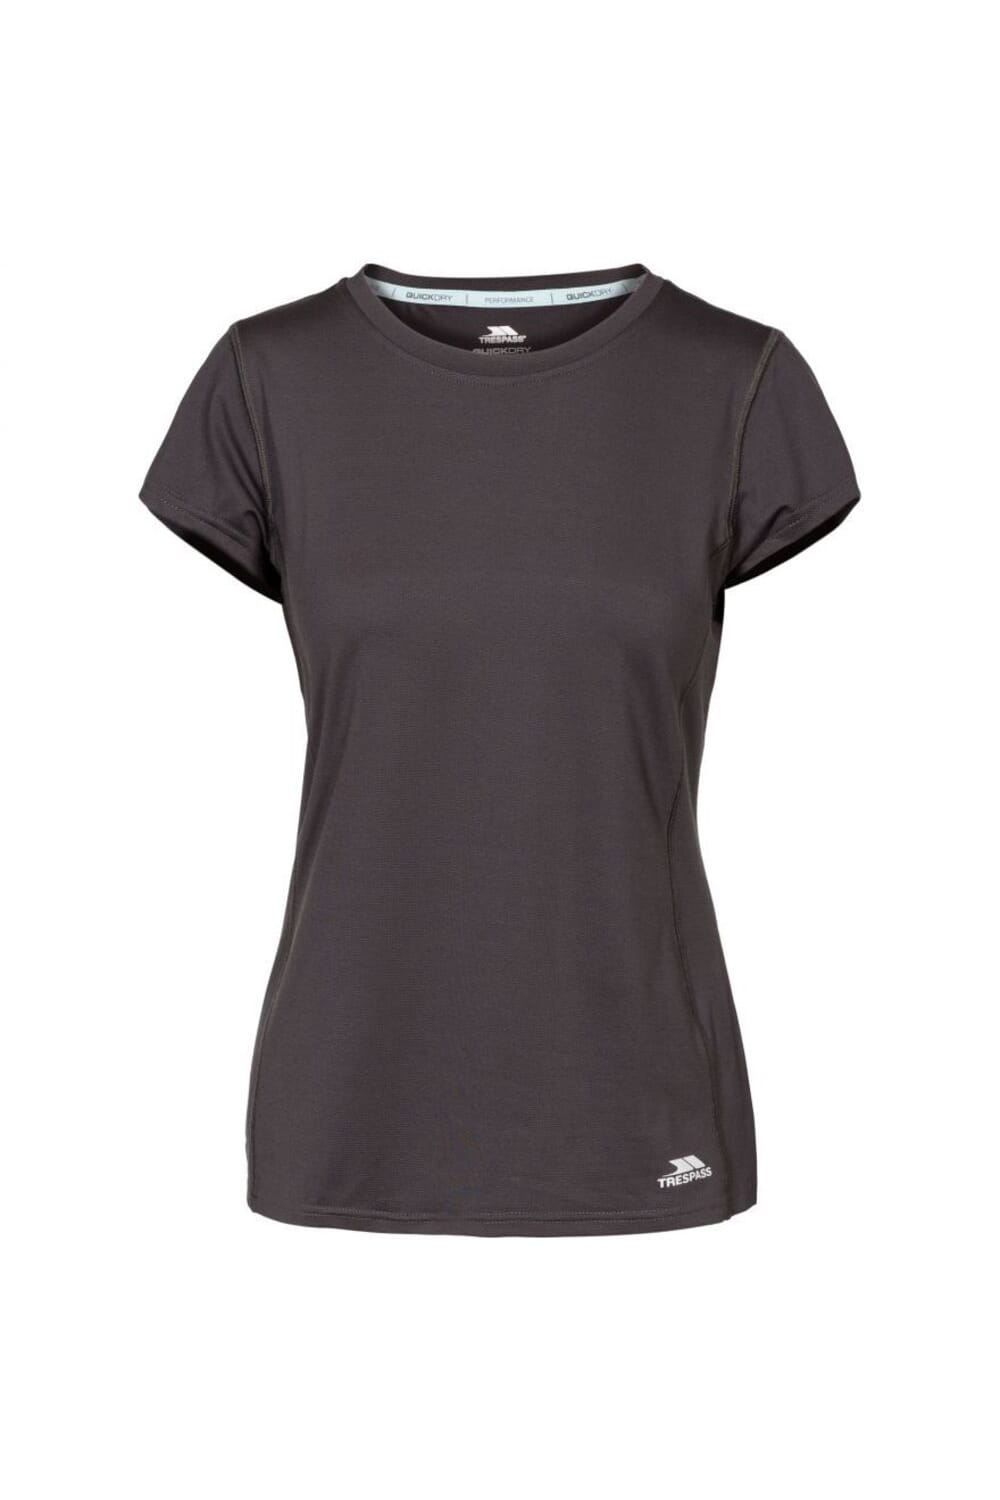 Trespass Womens/Ladies Jaylee T-Shirt (Carbon)